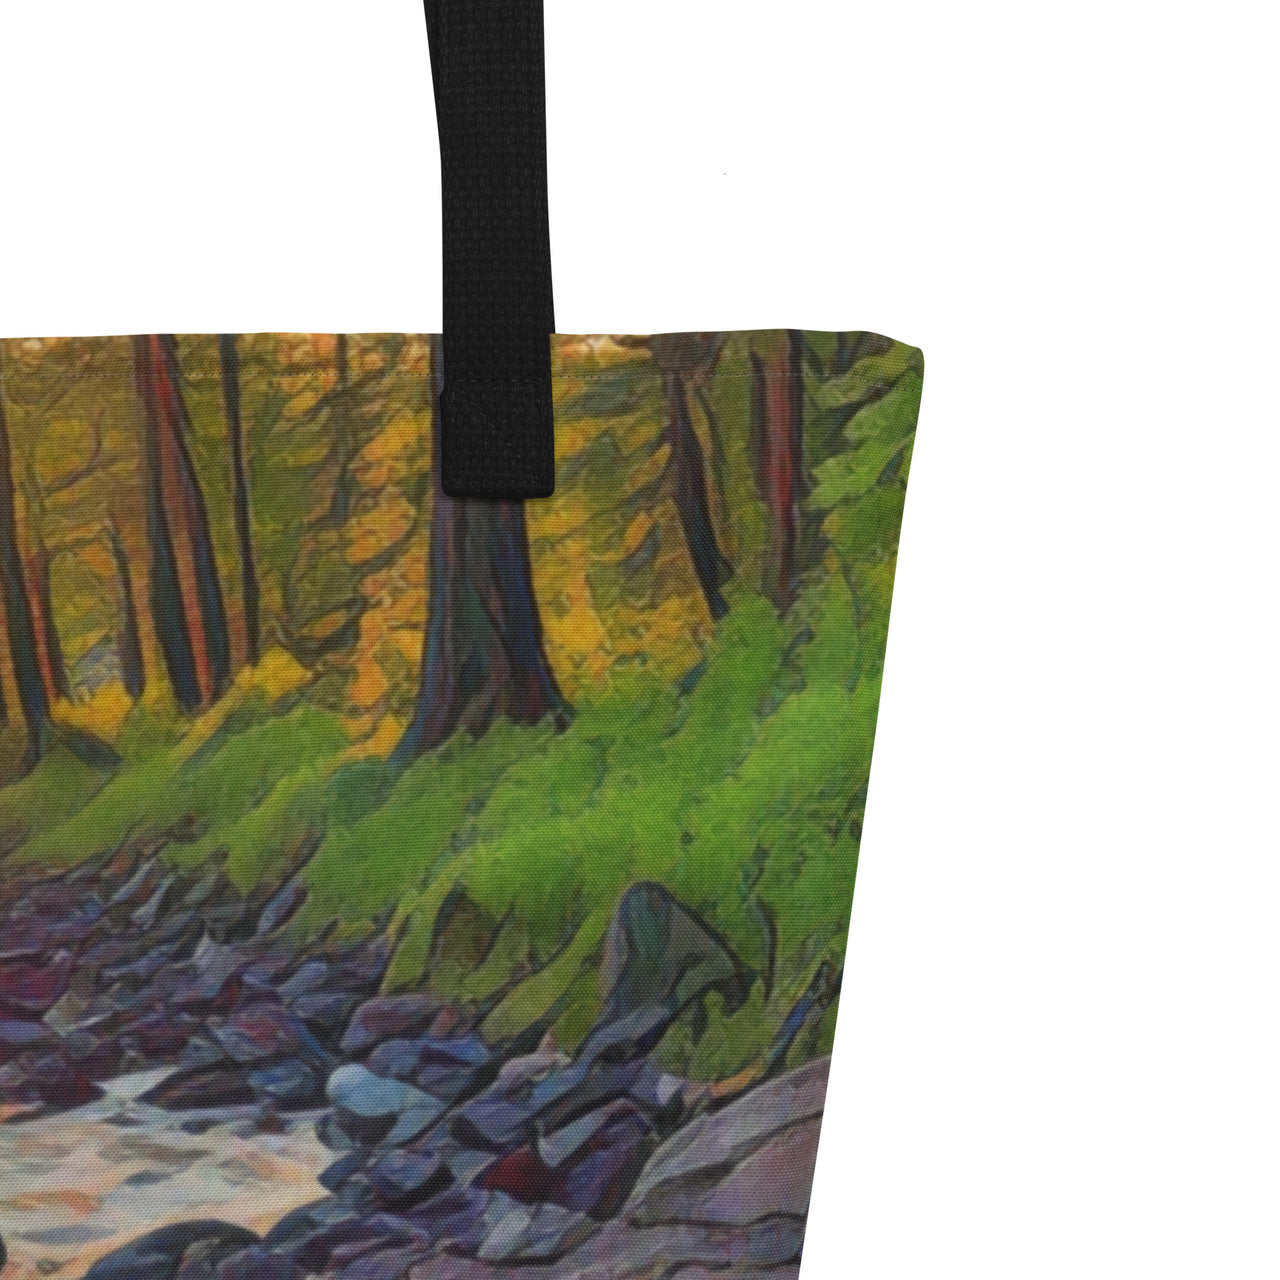 Oregon Stream - Digital Art - Large 16x20 Tote Bag W/Pocket $34.95